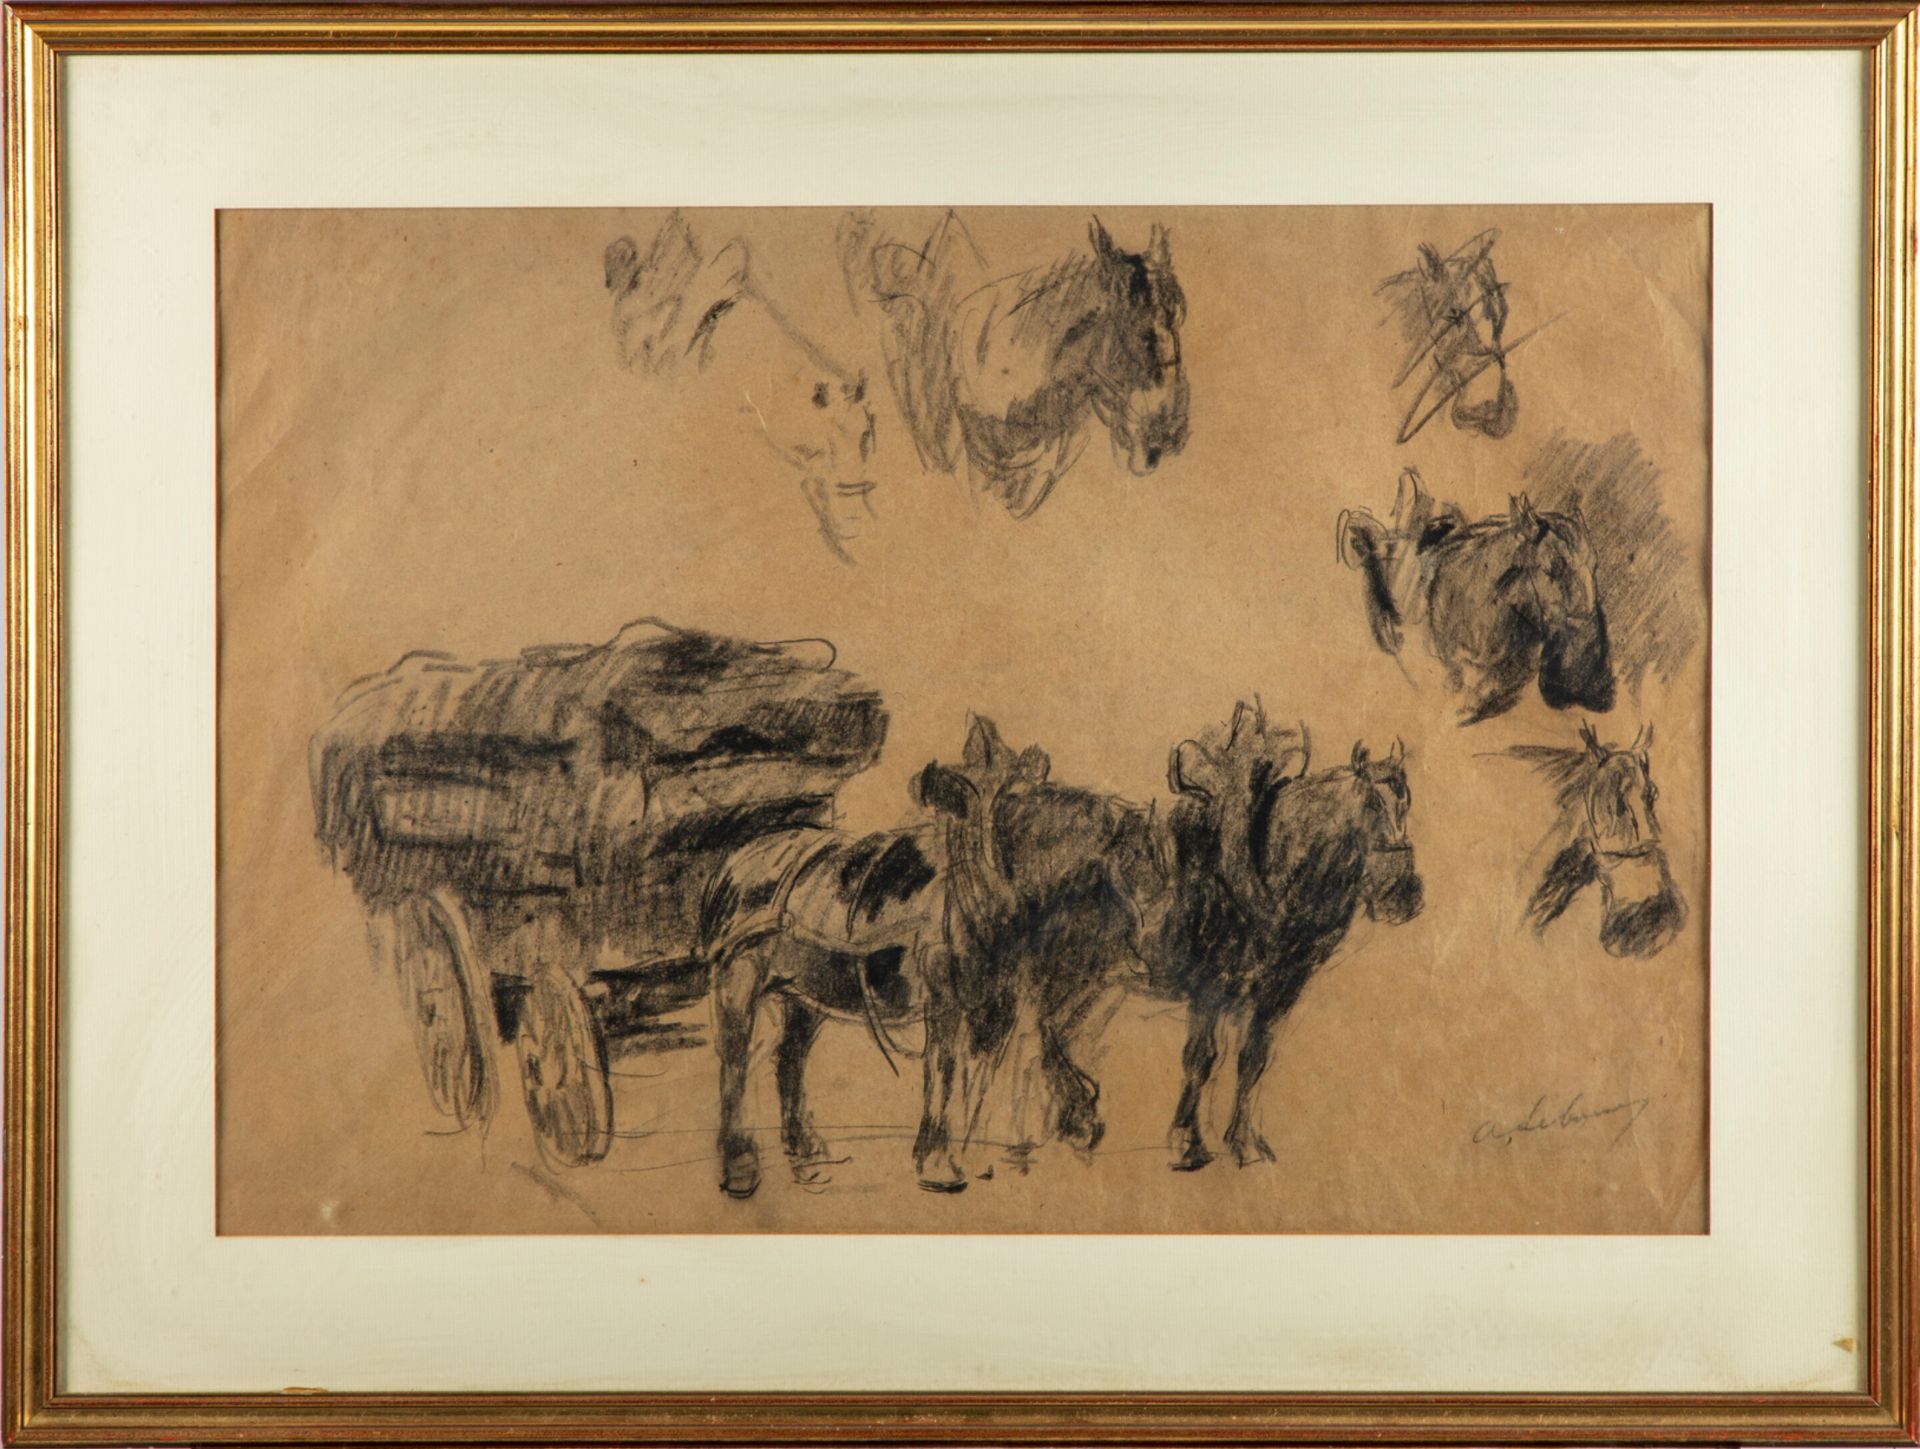 Albert LEBOURG 阿尔伯特-勒布格 (1849 -1928)

对马匹的研究

炭笔，右下角有签名

39 x 57 cm at sight